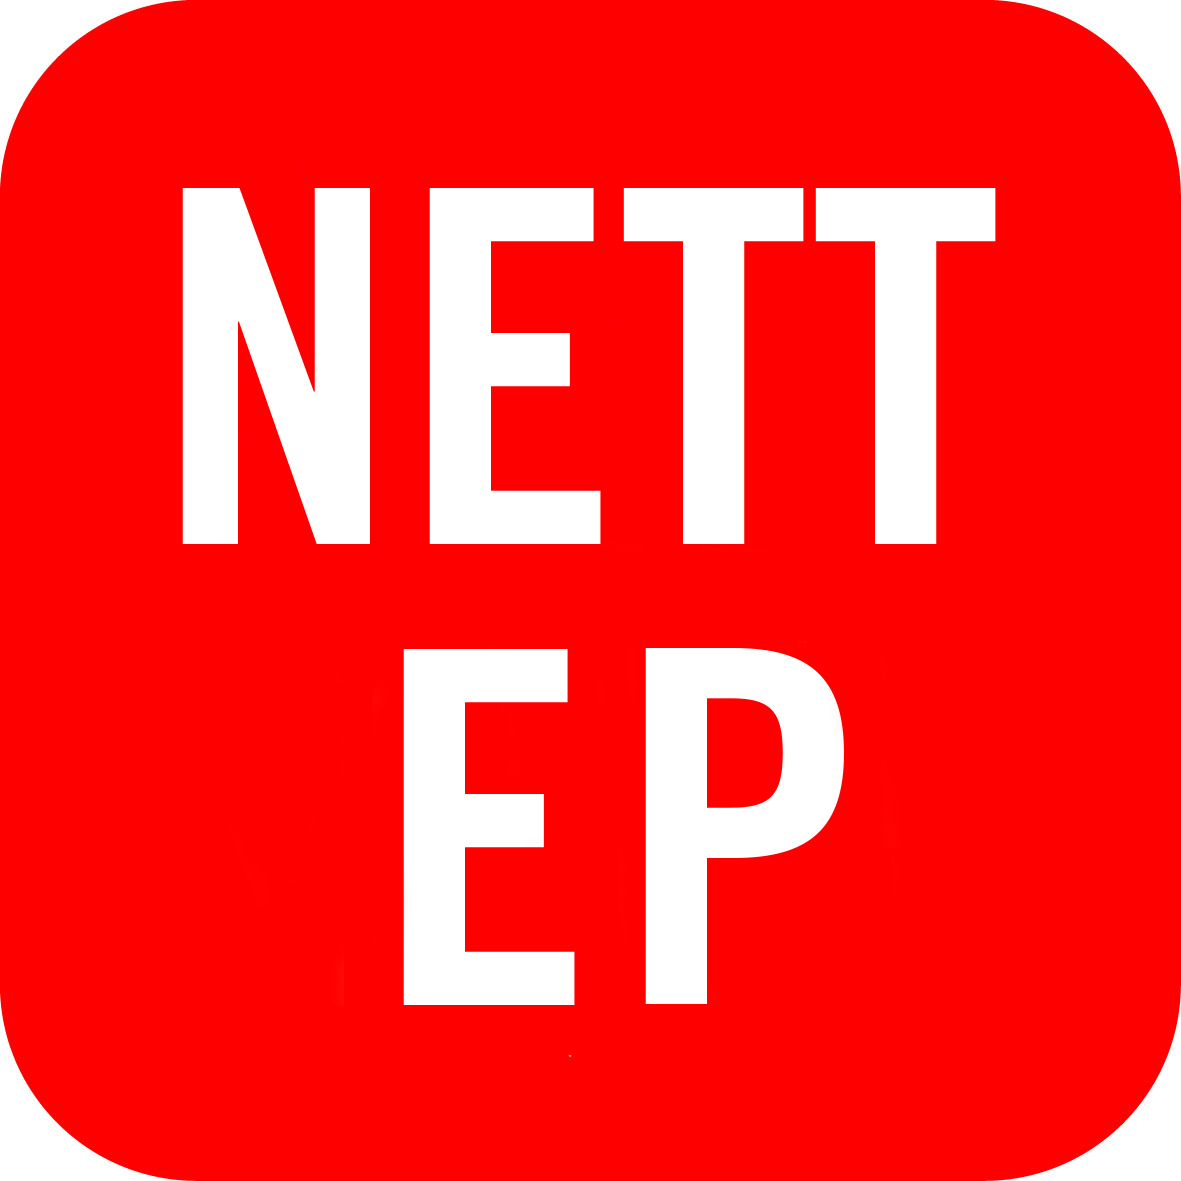 NETT EP